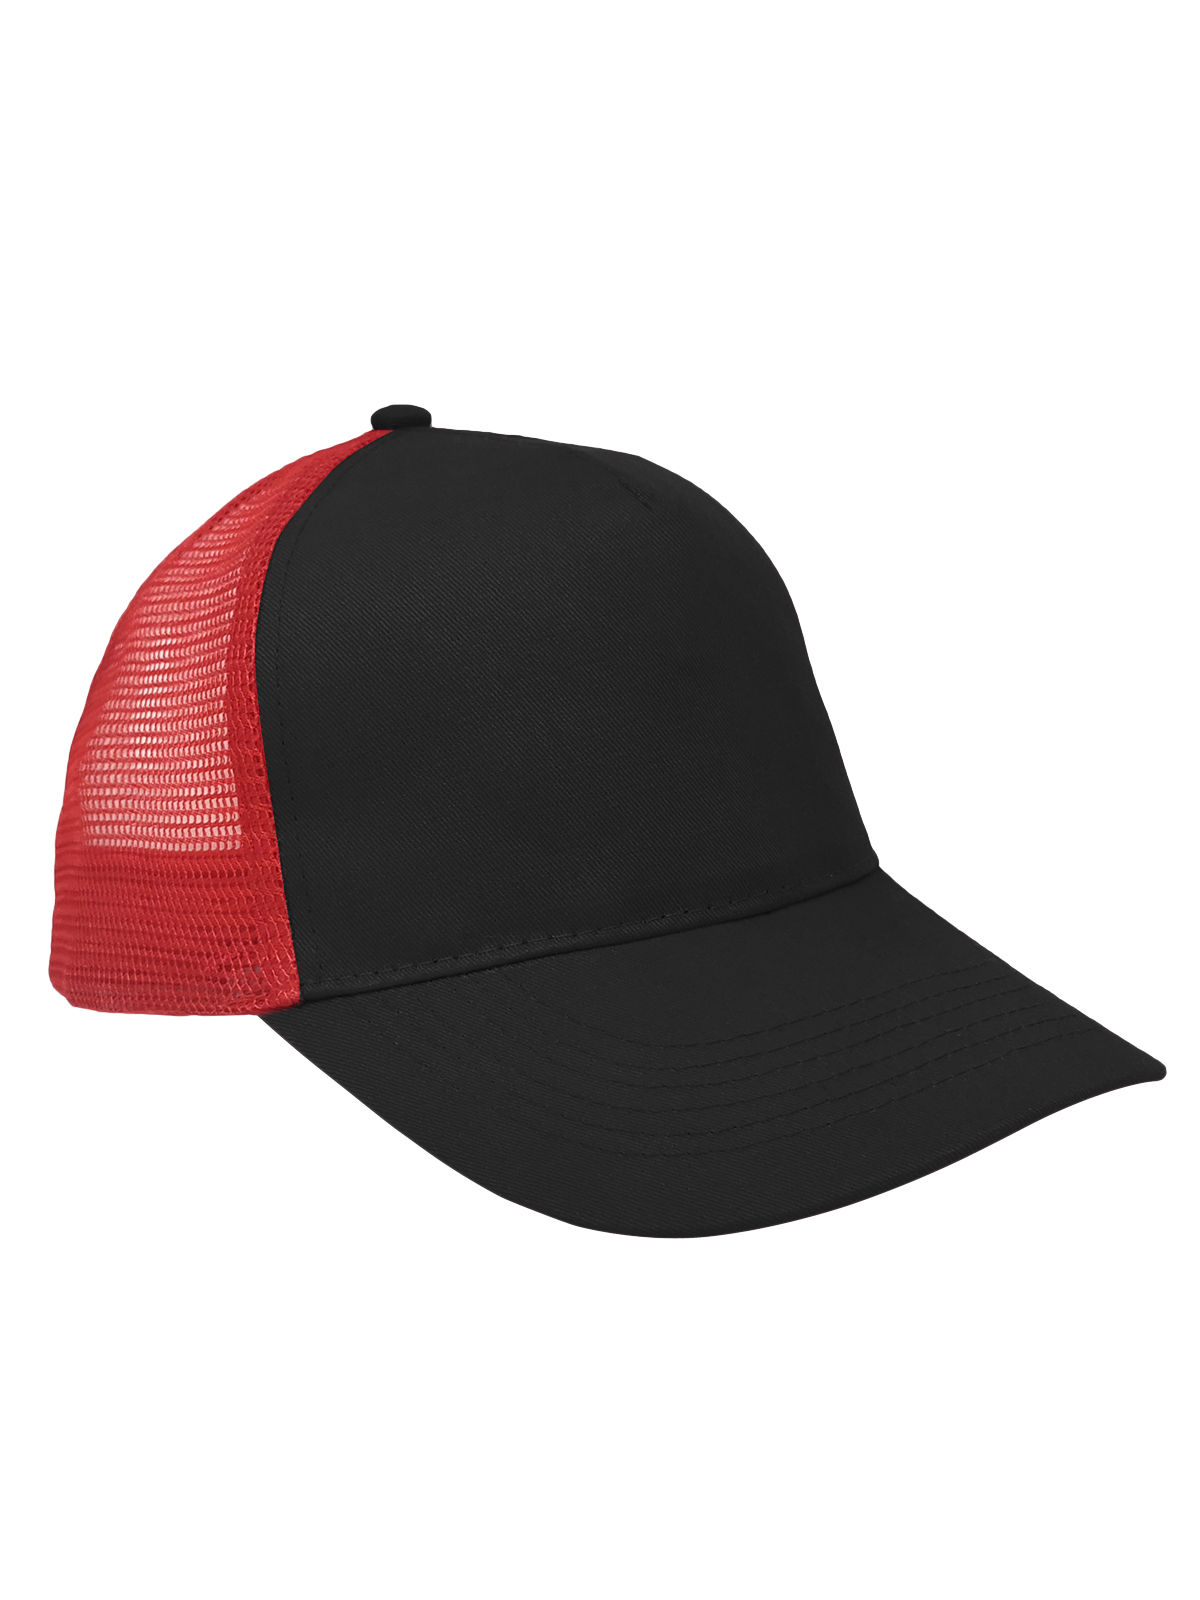 mesh-cotton-cap-black-red.webp